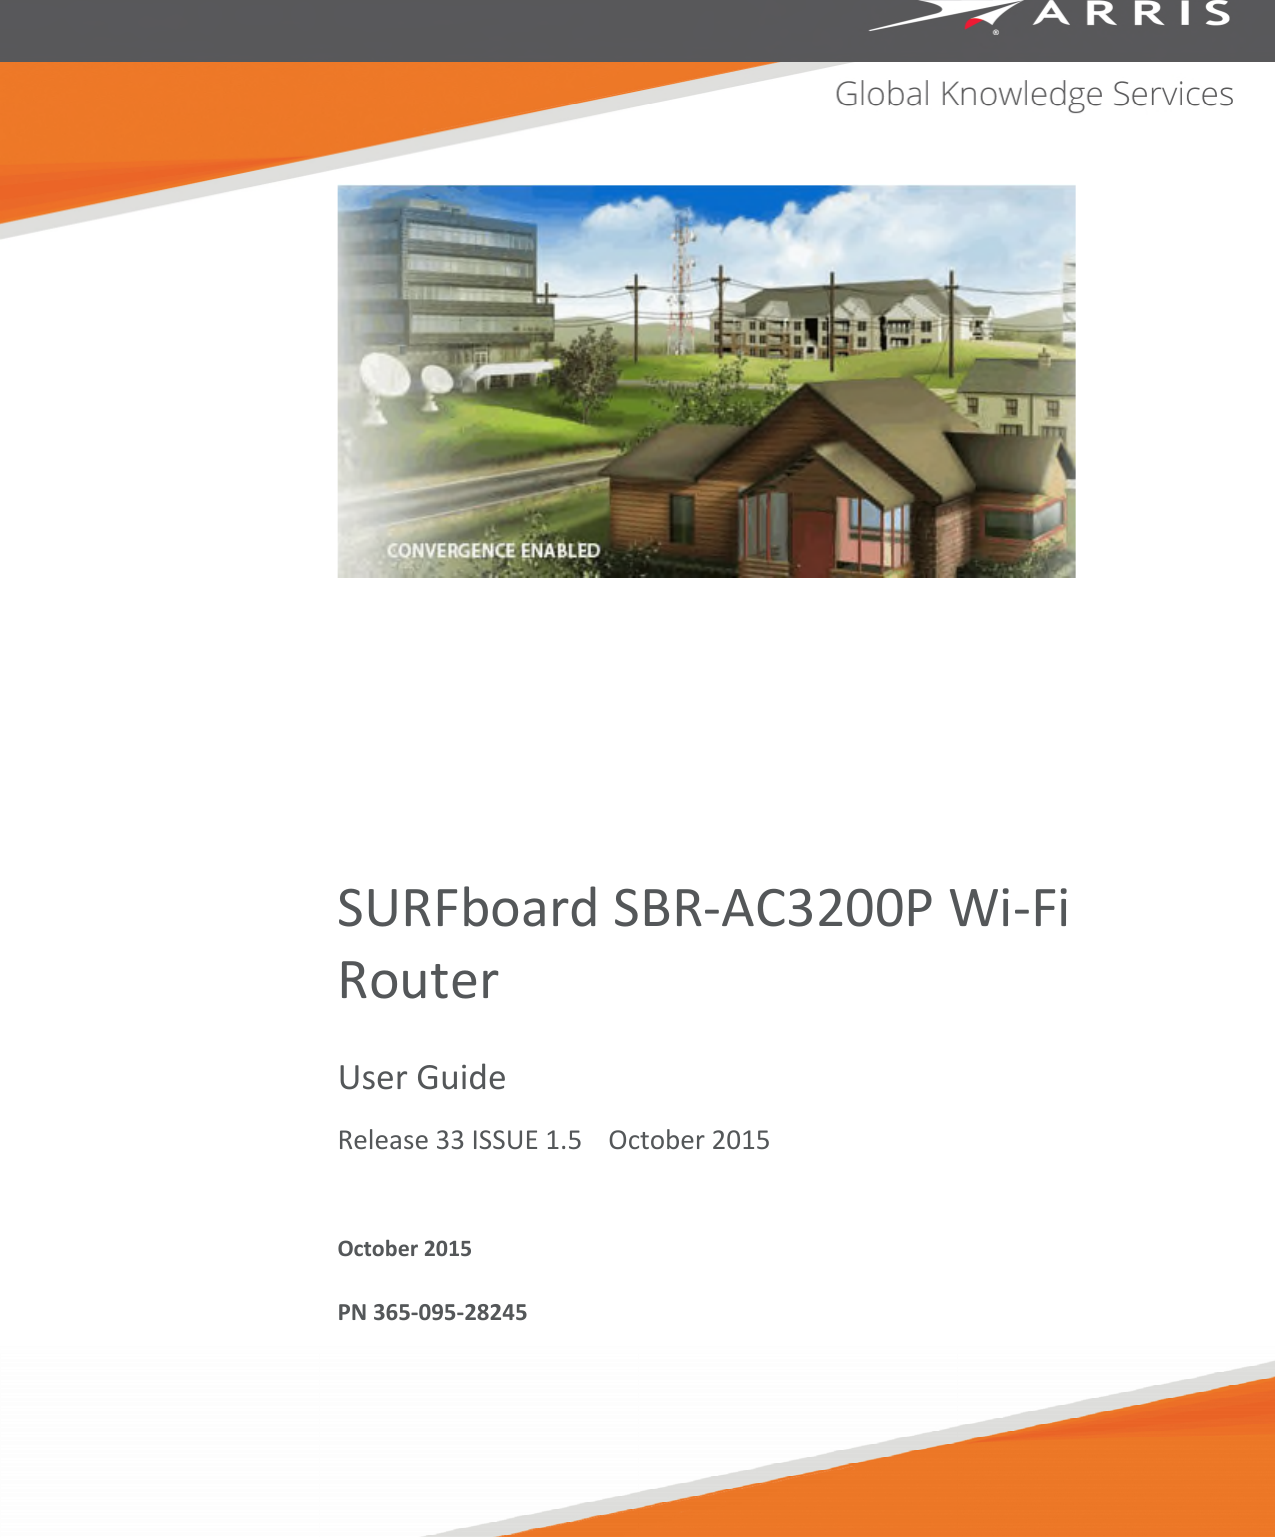 SURFboard SBR-AC3200P Wi-FiRouterUser GuidePN 365-095-28245Release 33 ISSUE 1.5 October 2015October 2015